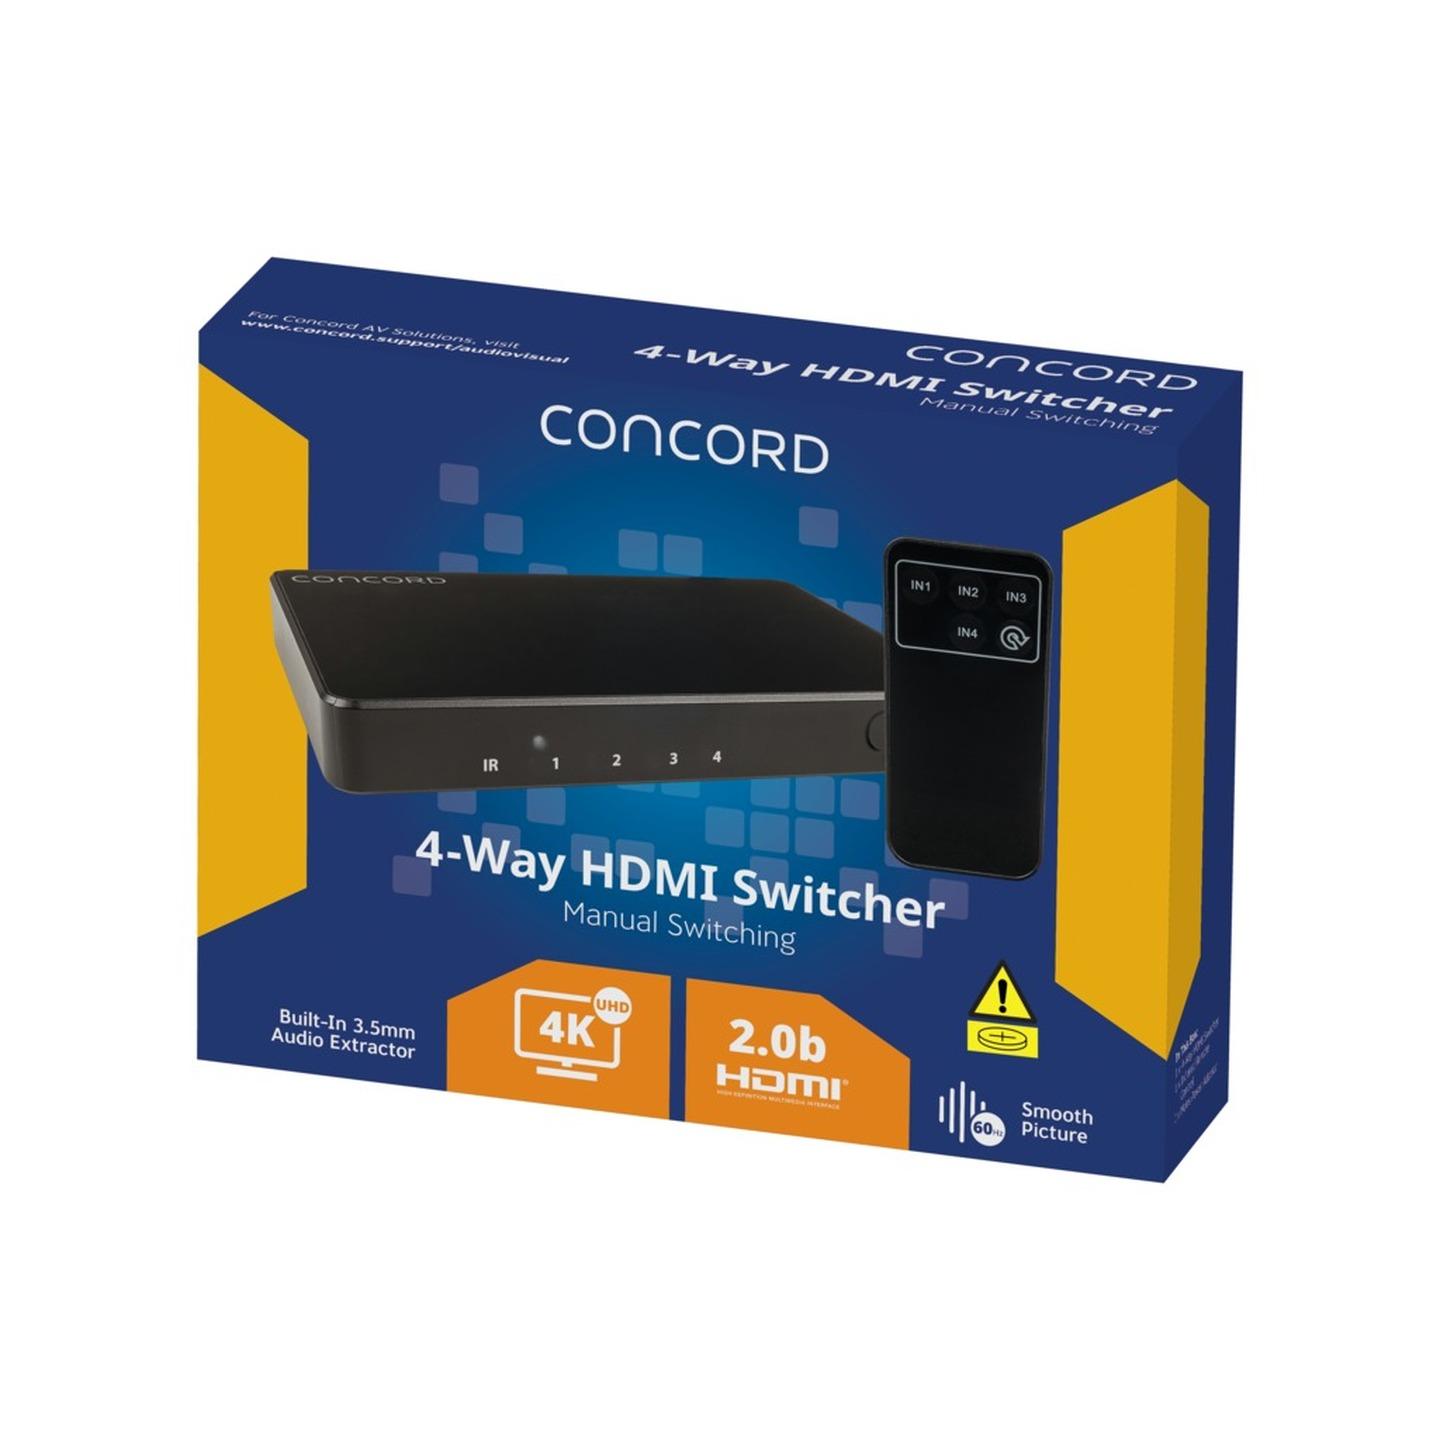 Concord 4-Way 4K HDMI Switcher